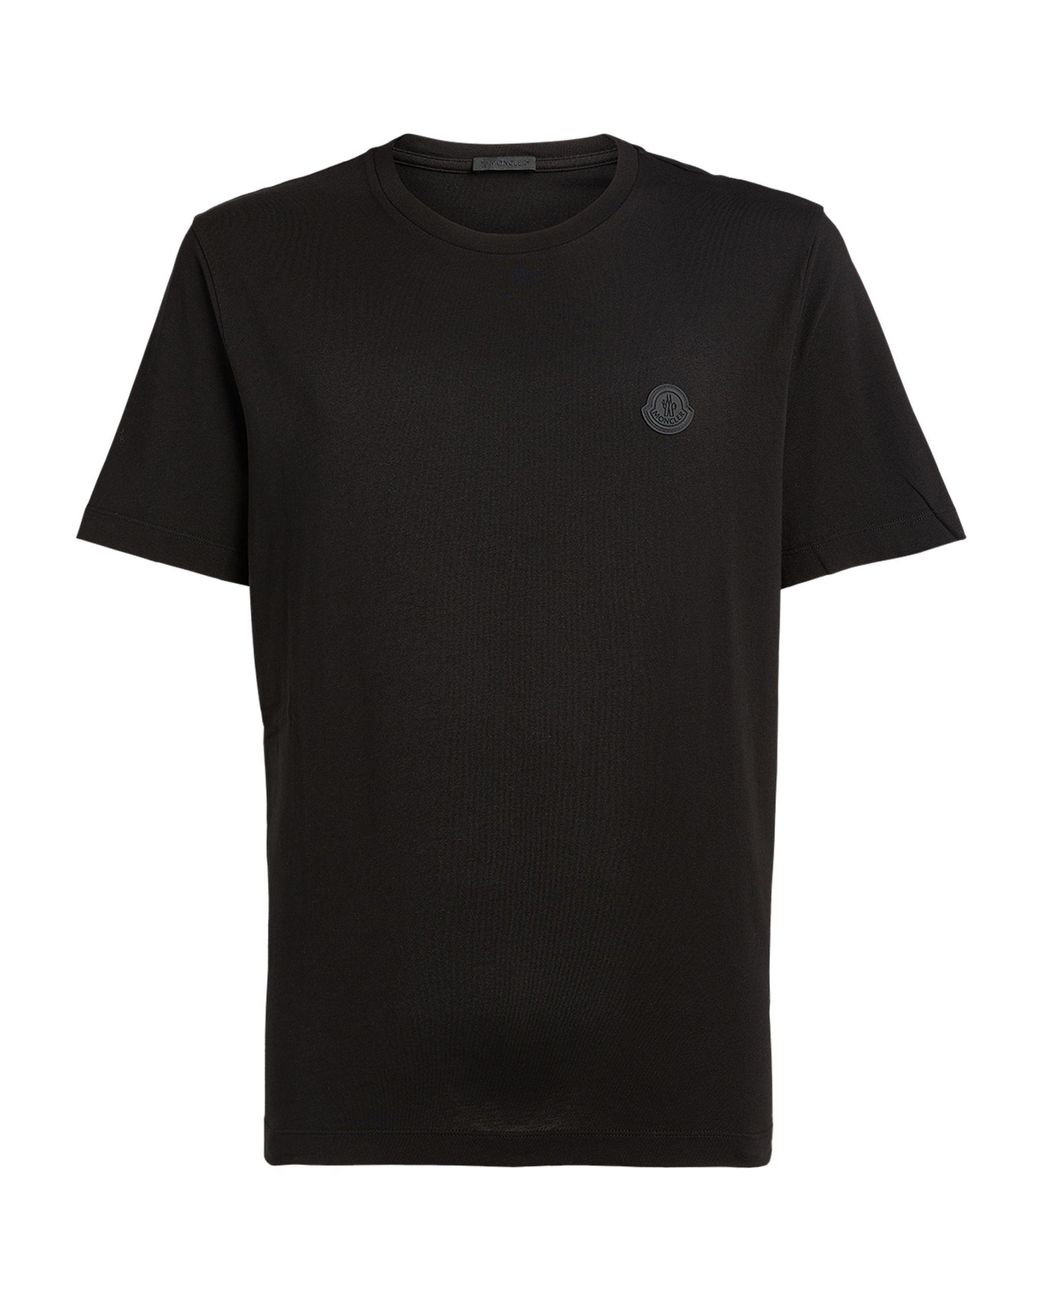 Moncler Cotton Logo T-shirt in Black for Men - Lyst